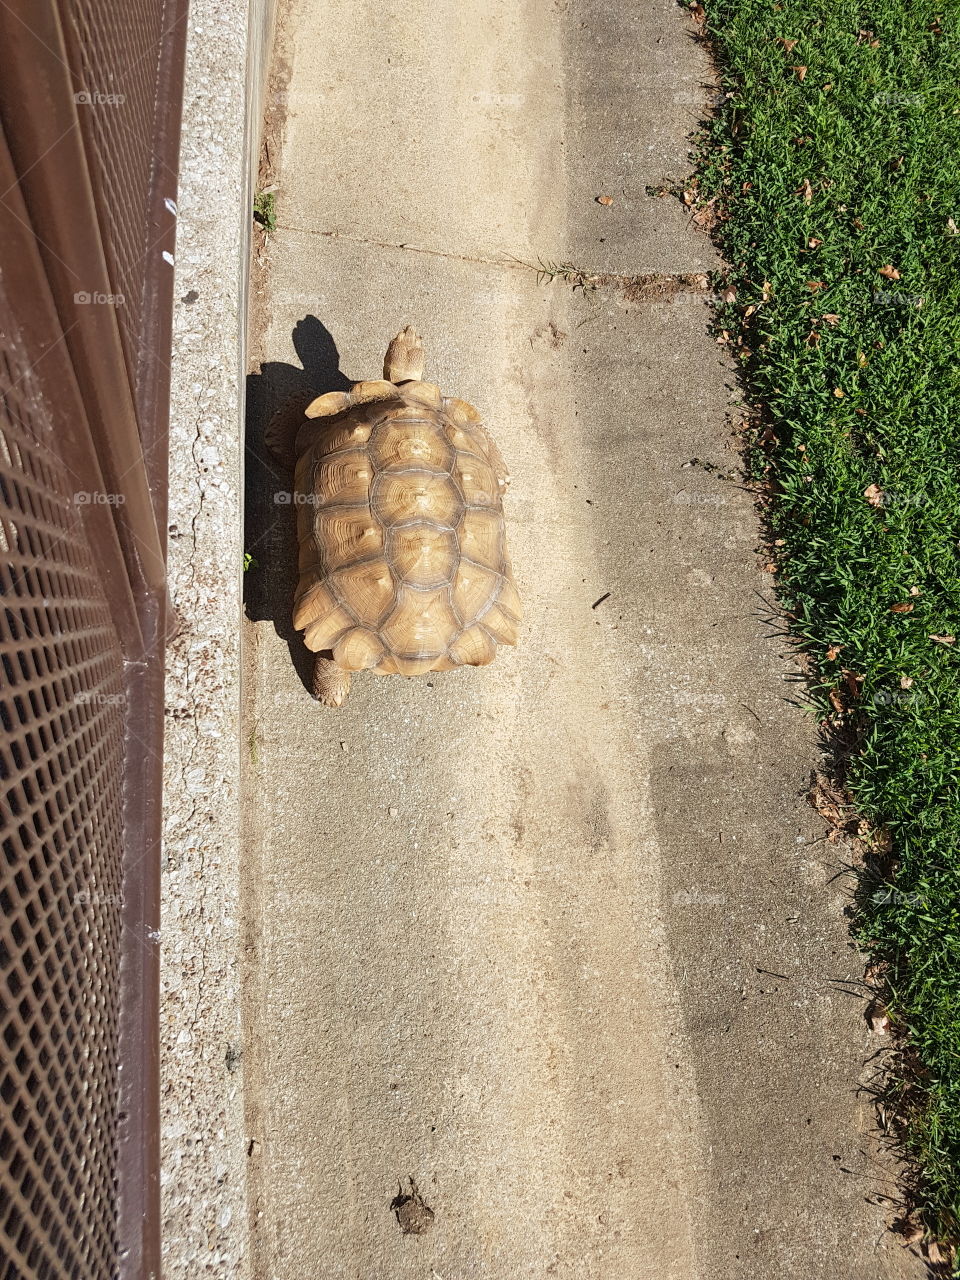 Young Aldabra Tortoise exploring concrete habitat boundary at zoo